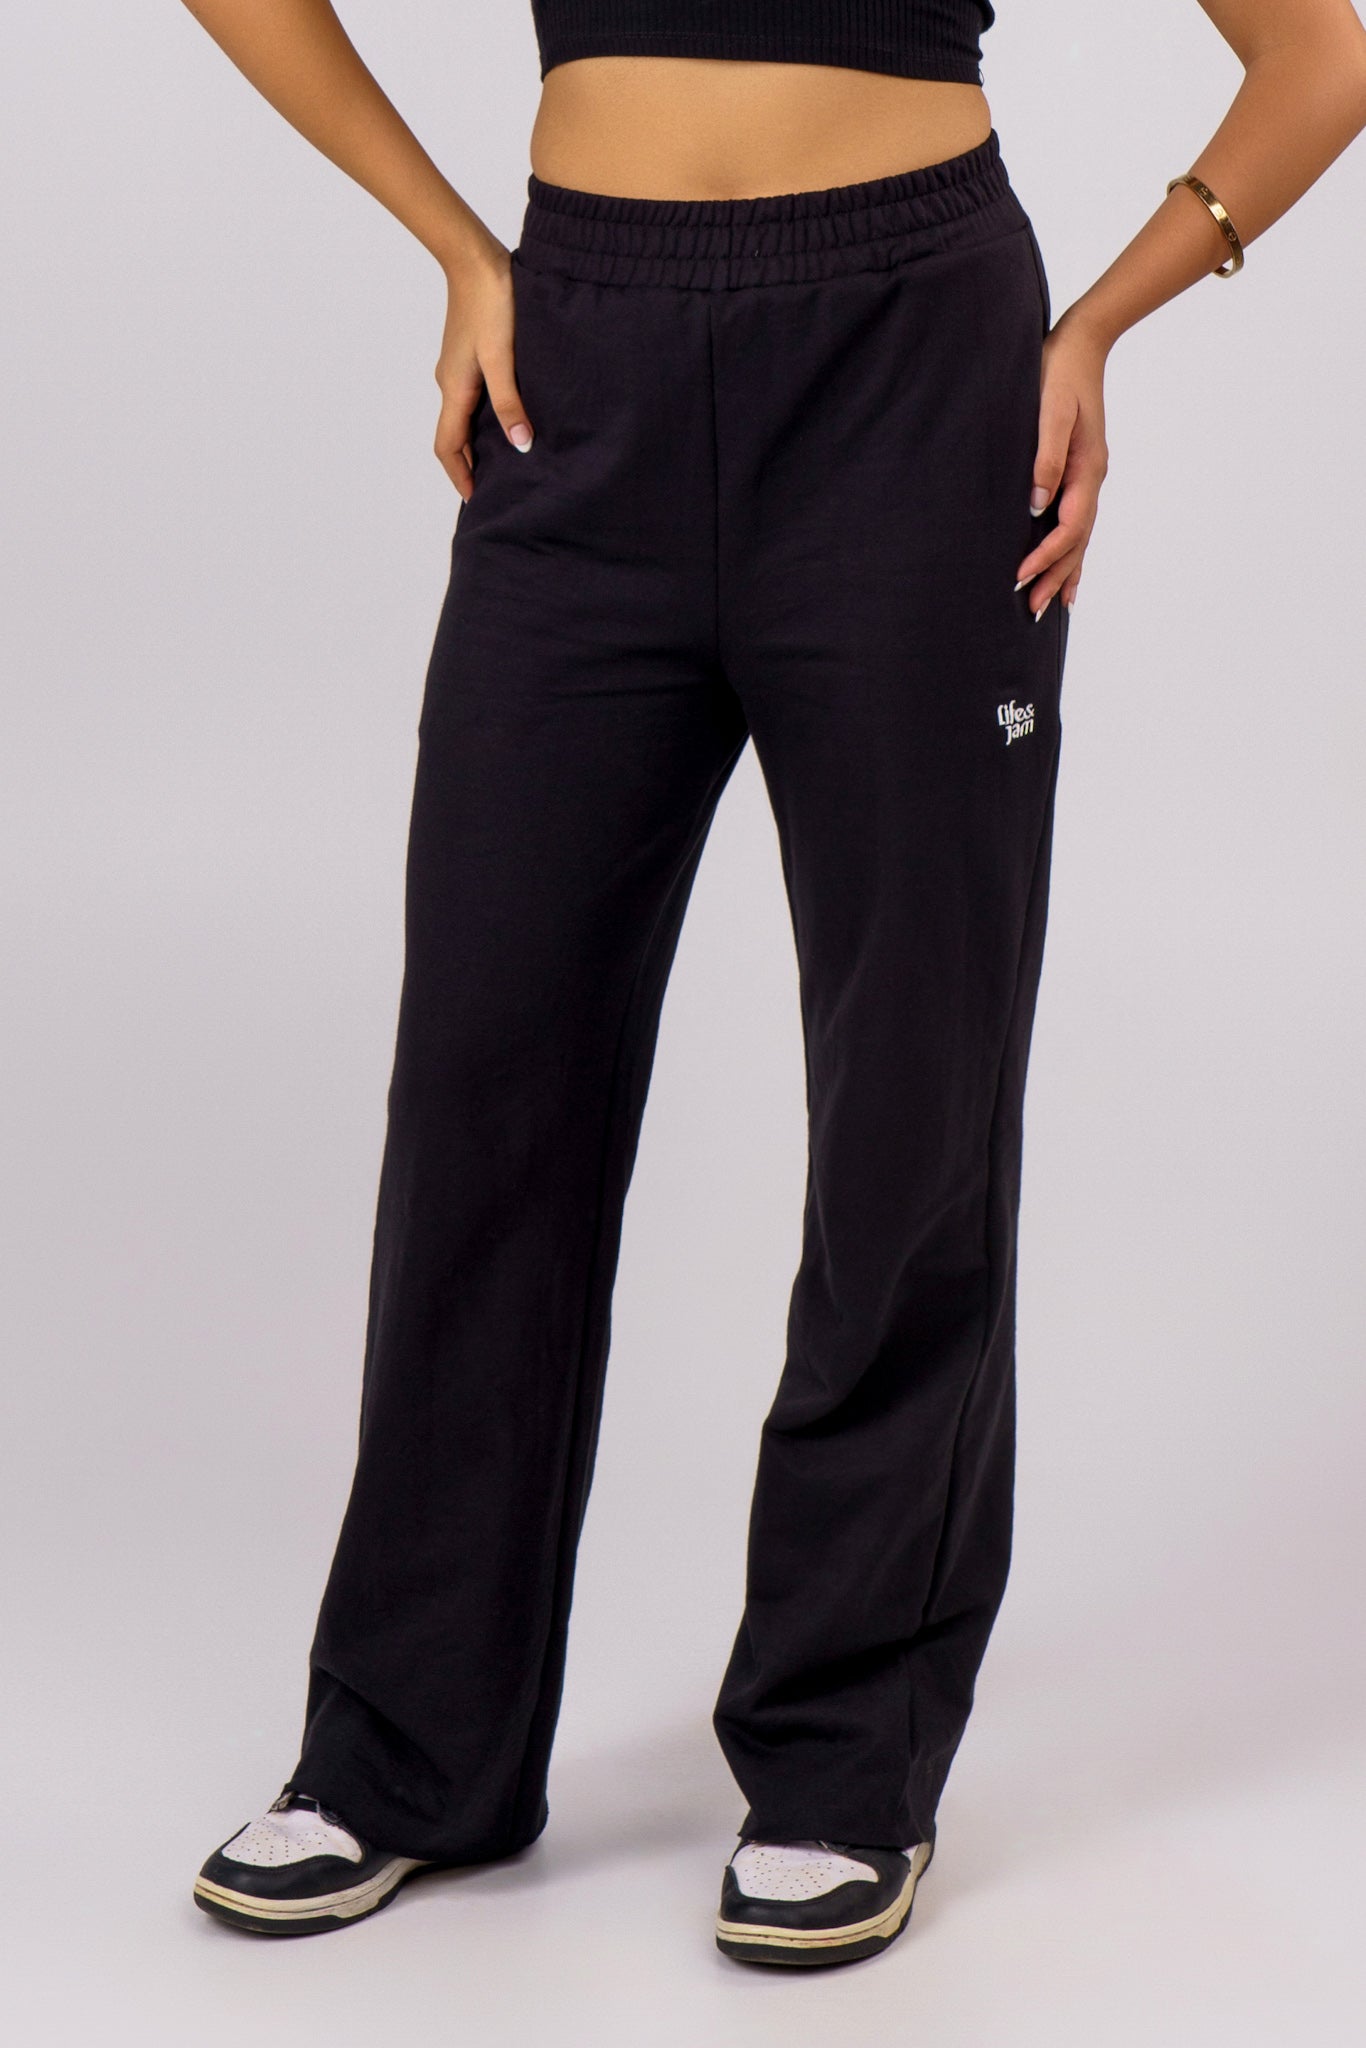 NACHILA Women's Pajama Bottoms-Viscose Made from Bamboo,Wide Leg Lounge  Pants Cool Yoga Pants Soft Sweatpants Dark Grey S at Amazon Women's  Clothing store